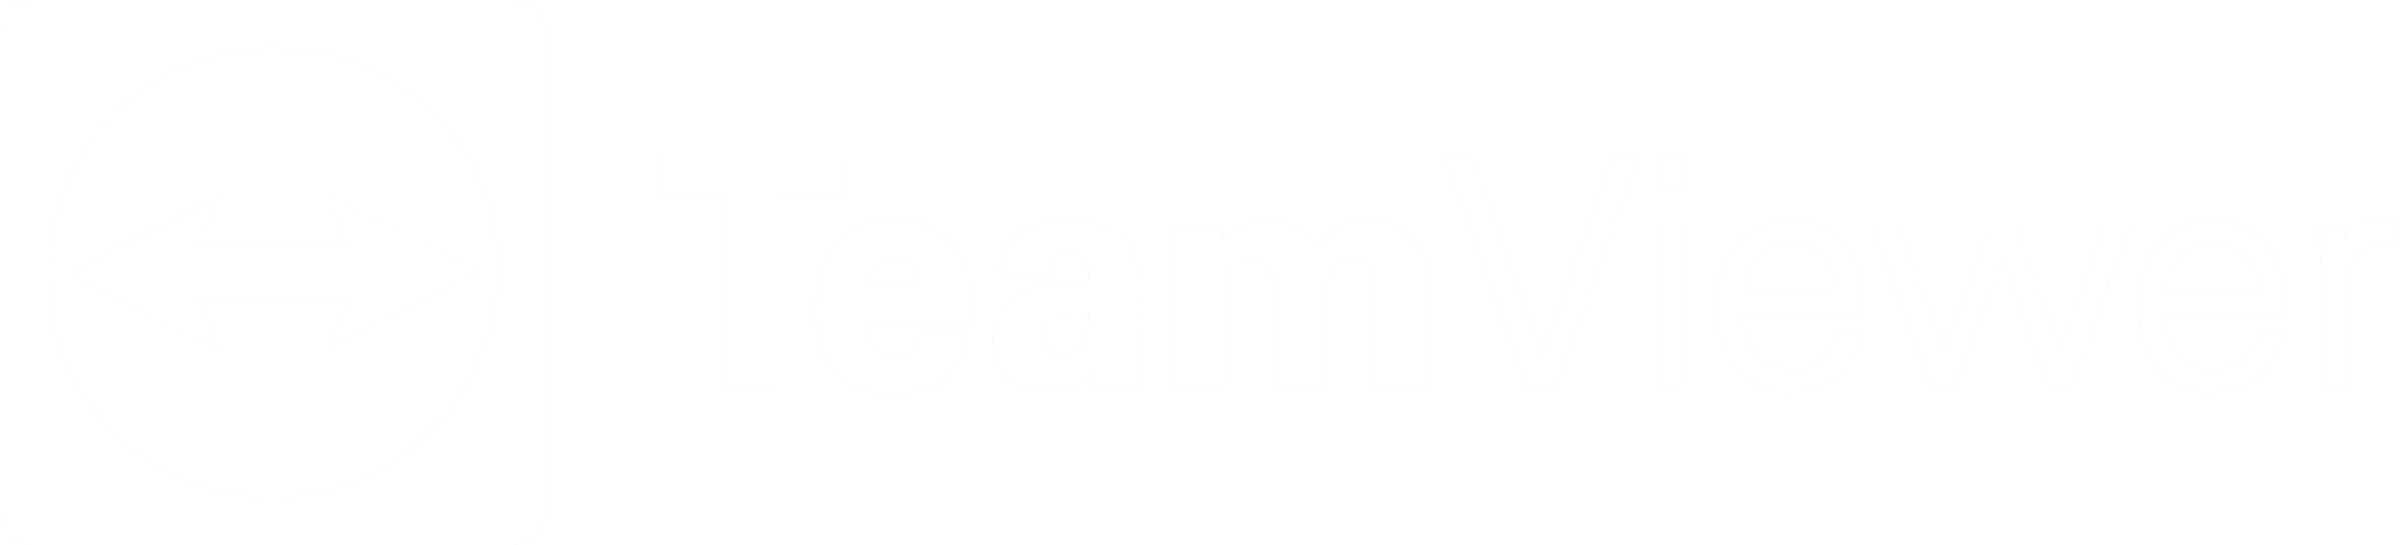 team-viewer-logo-black-and-white